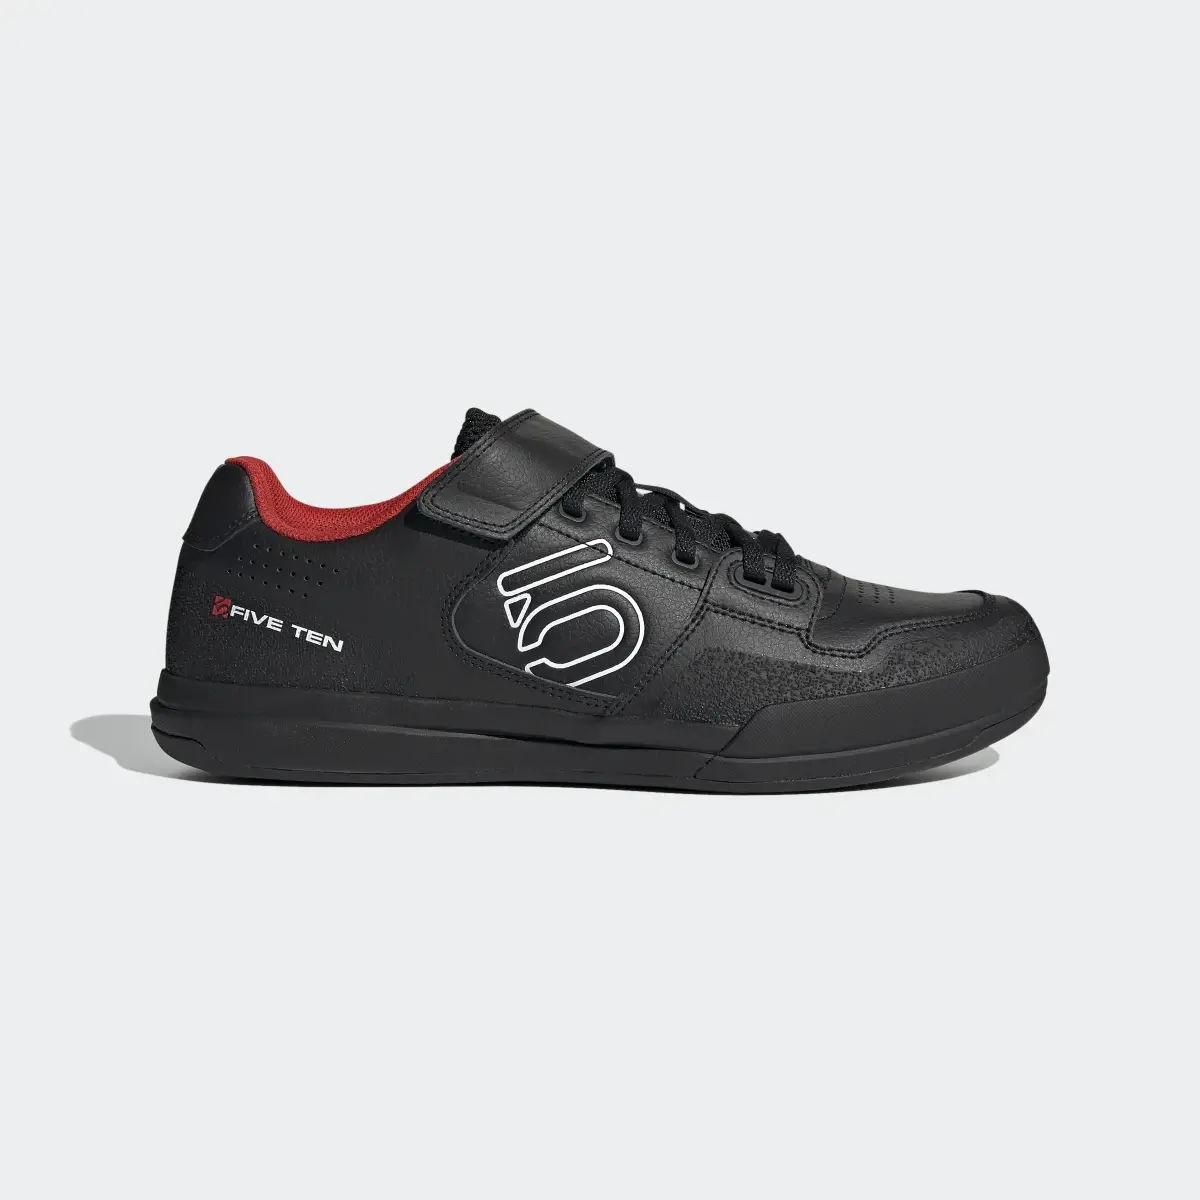 Adidas Five Ten Hellcat Mountainbiking-Schuh. 2